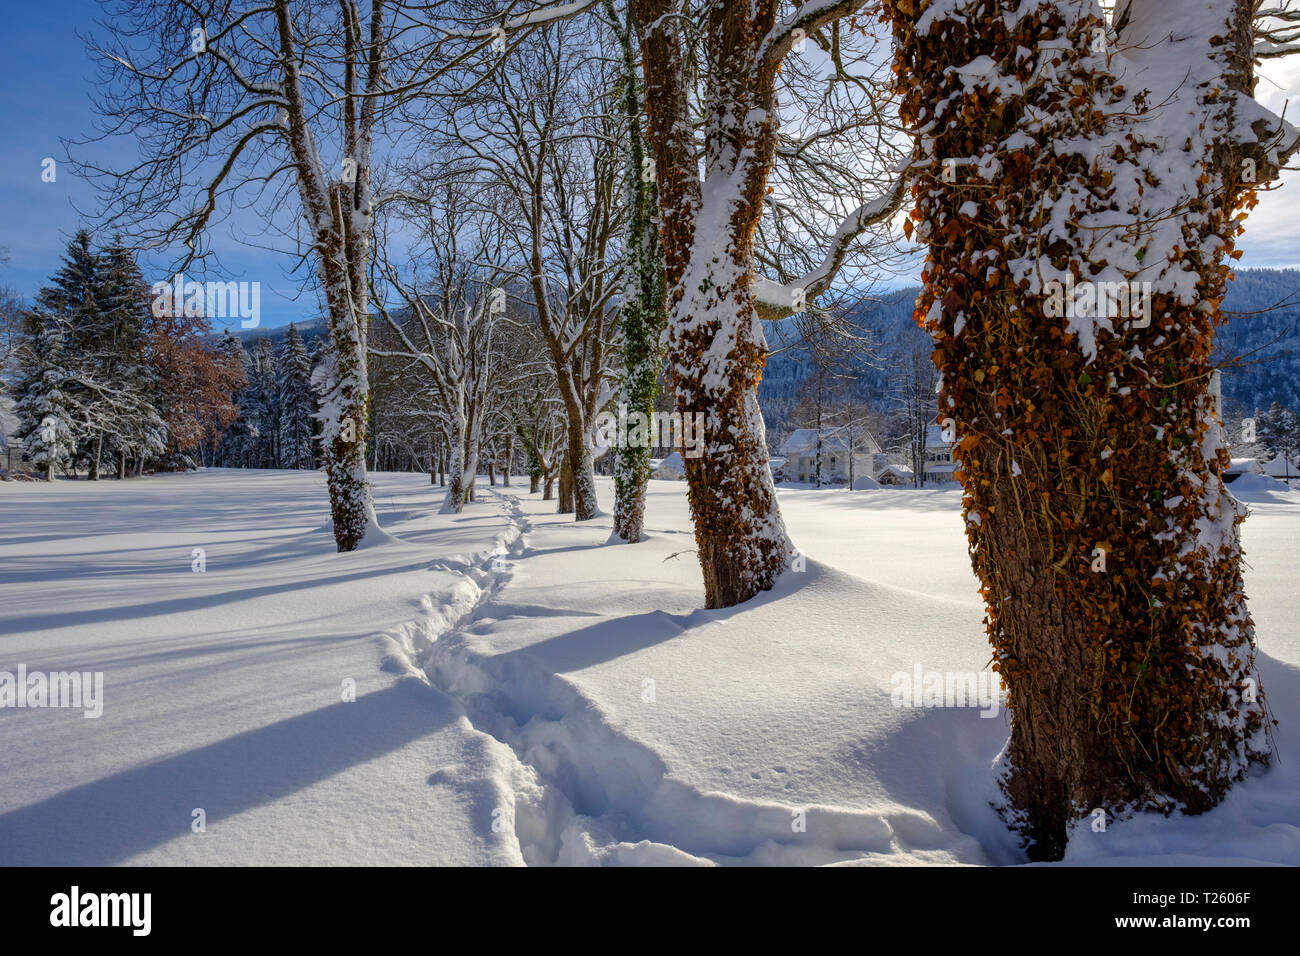 Germany, Bavaria, Bad Heilbrunn, tree-lined path in winter landscape Stock Photo